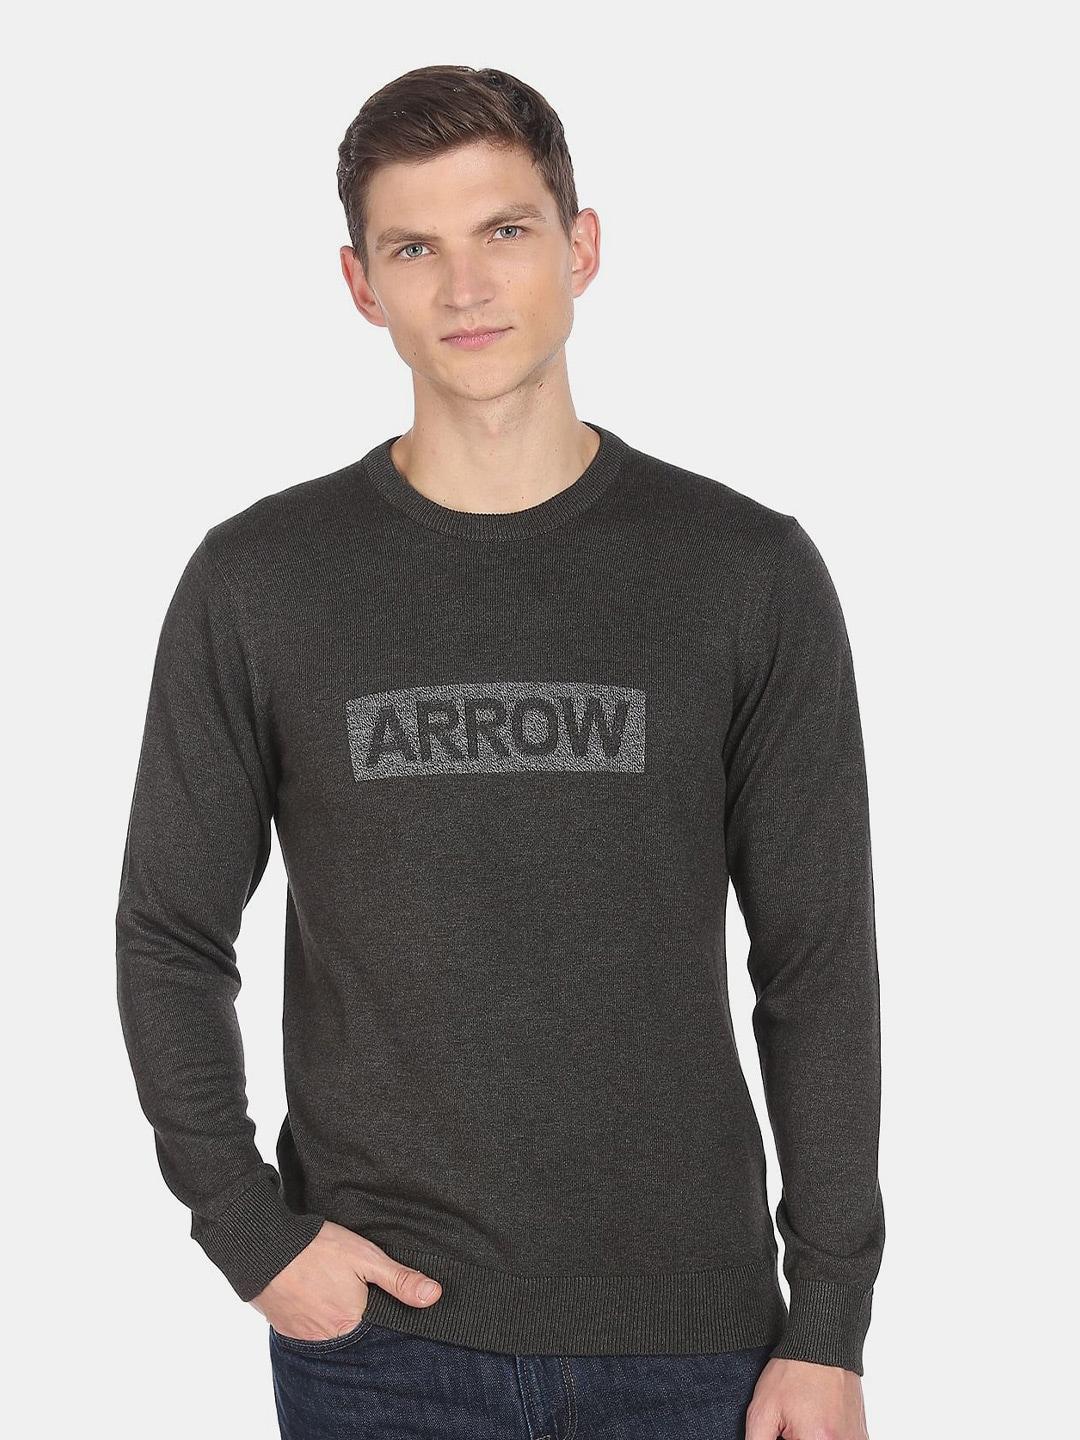 Arrow Sport Men Typography Printed Pullover